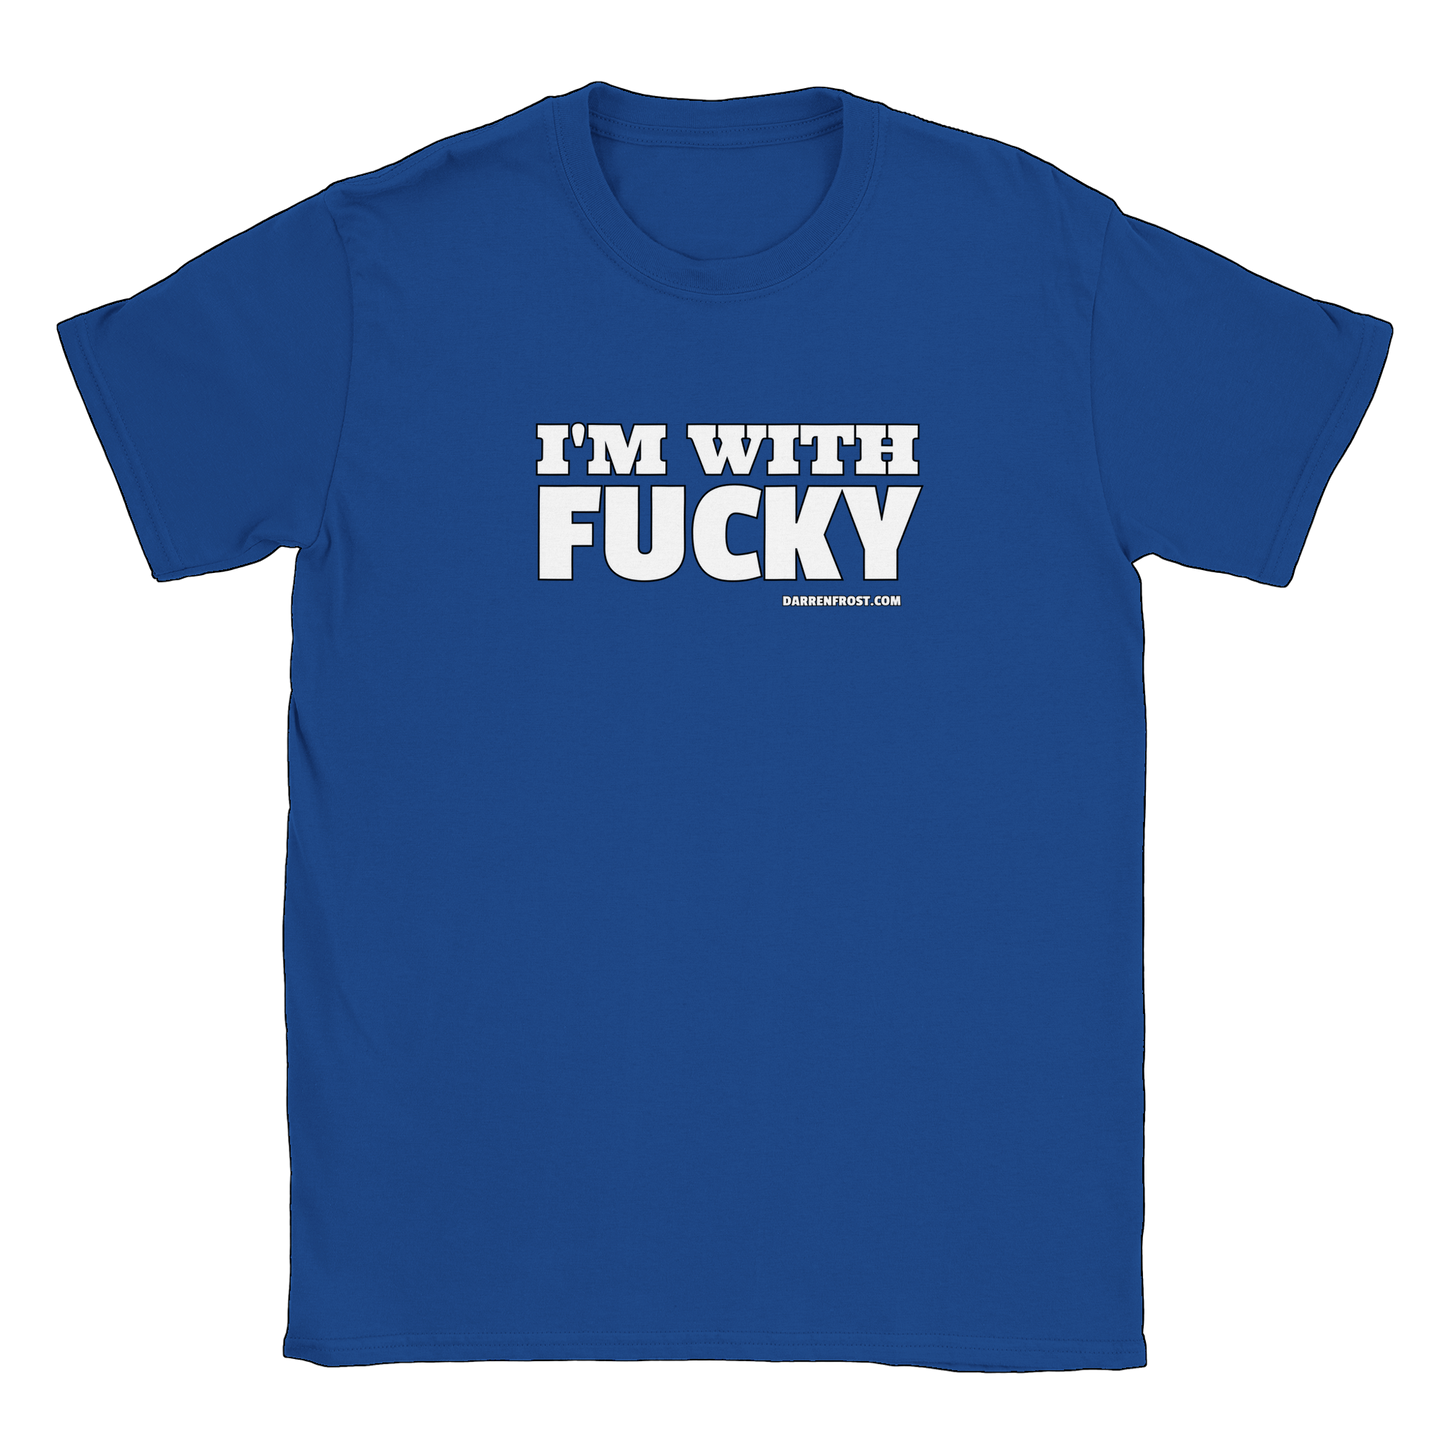 I'M WITH FUCKY (darrenfrost.com) - Classic Unisex Crewneck T-shirt